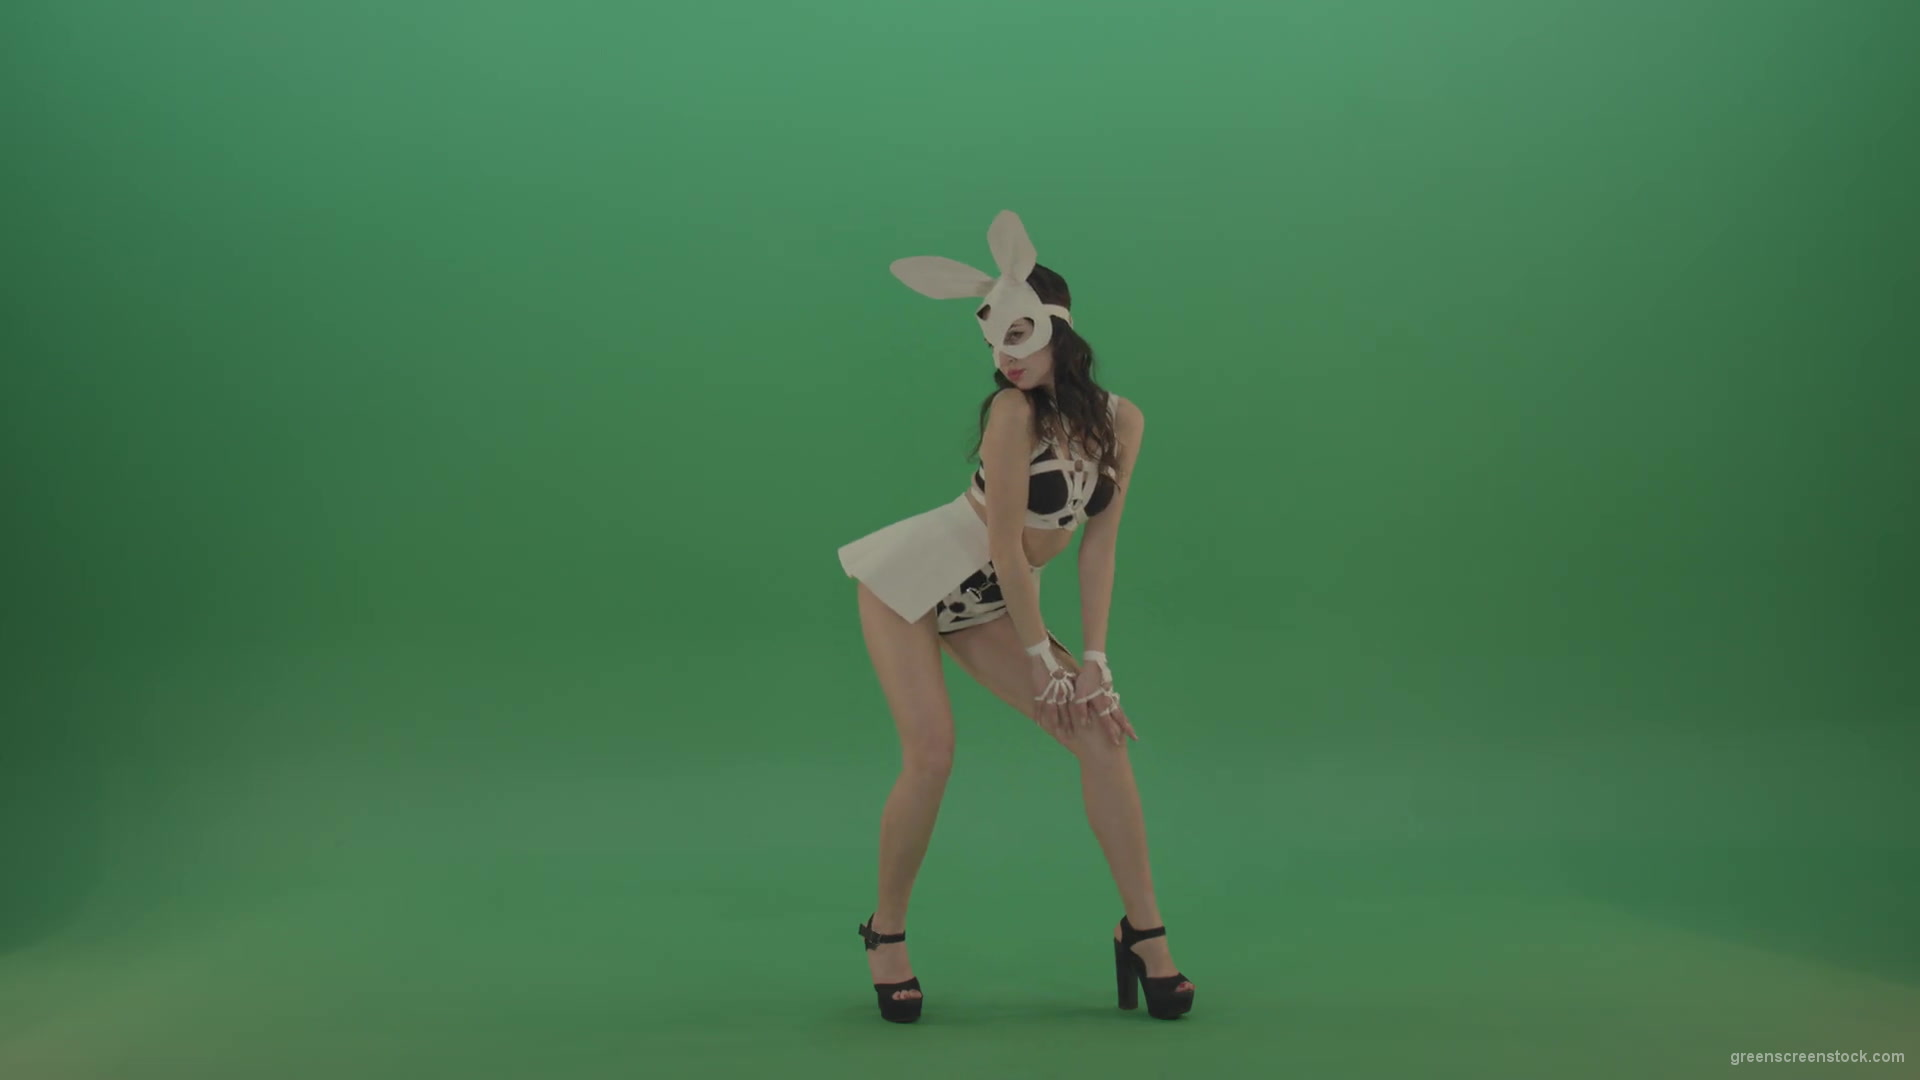 Sexy-posing-Bunny-Girl-dancing-Go-Go-Rabbit-Dance-over-Green-Screen-1920_007 Green Screen Stock